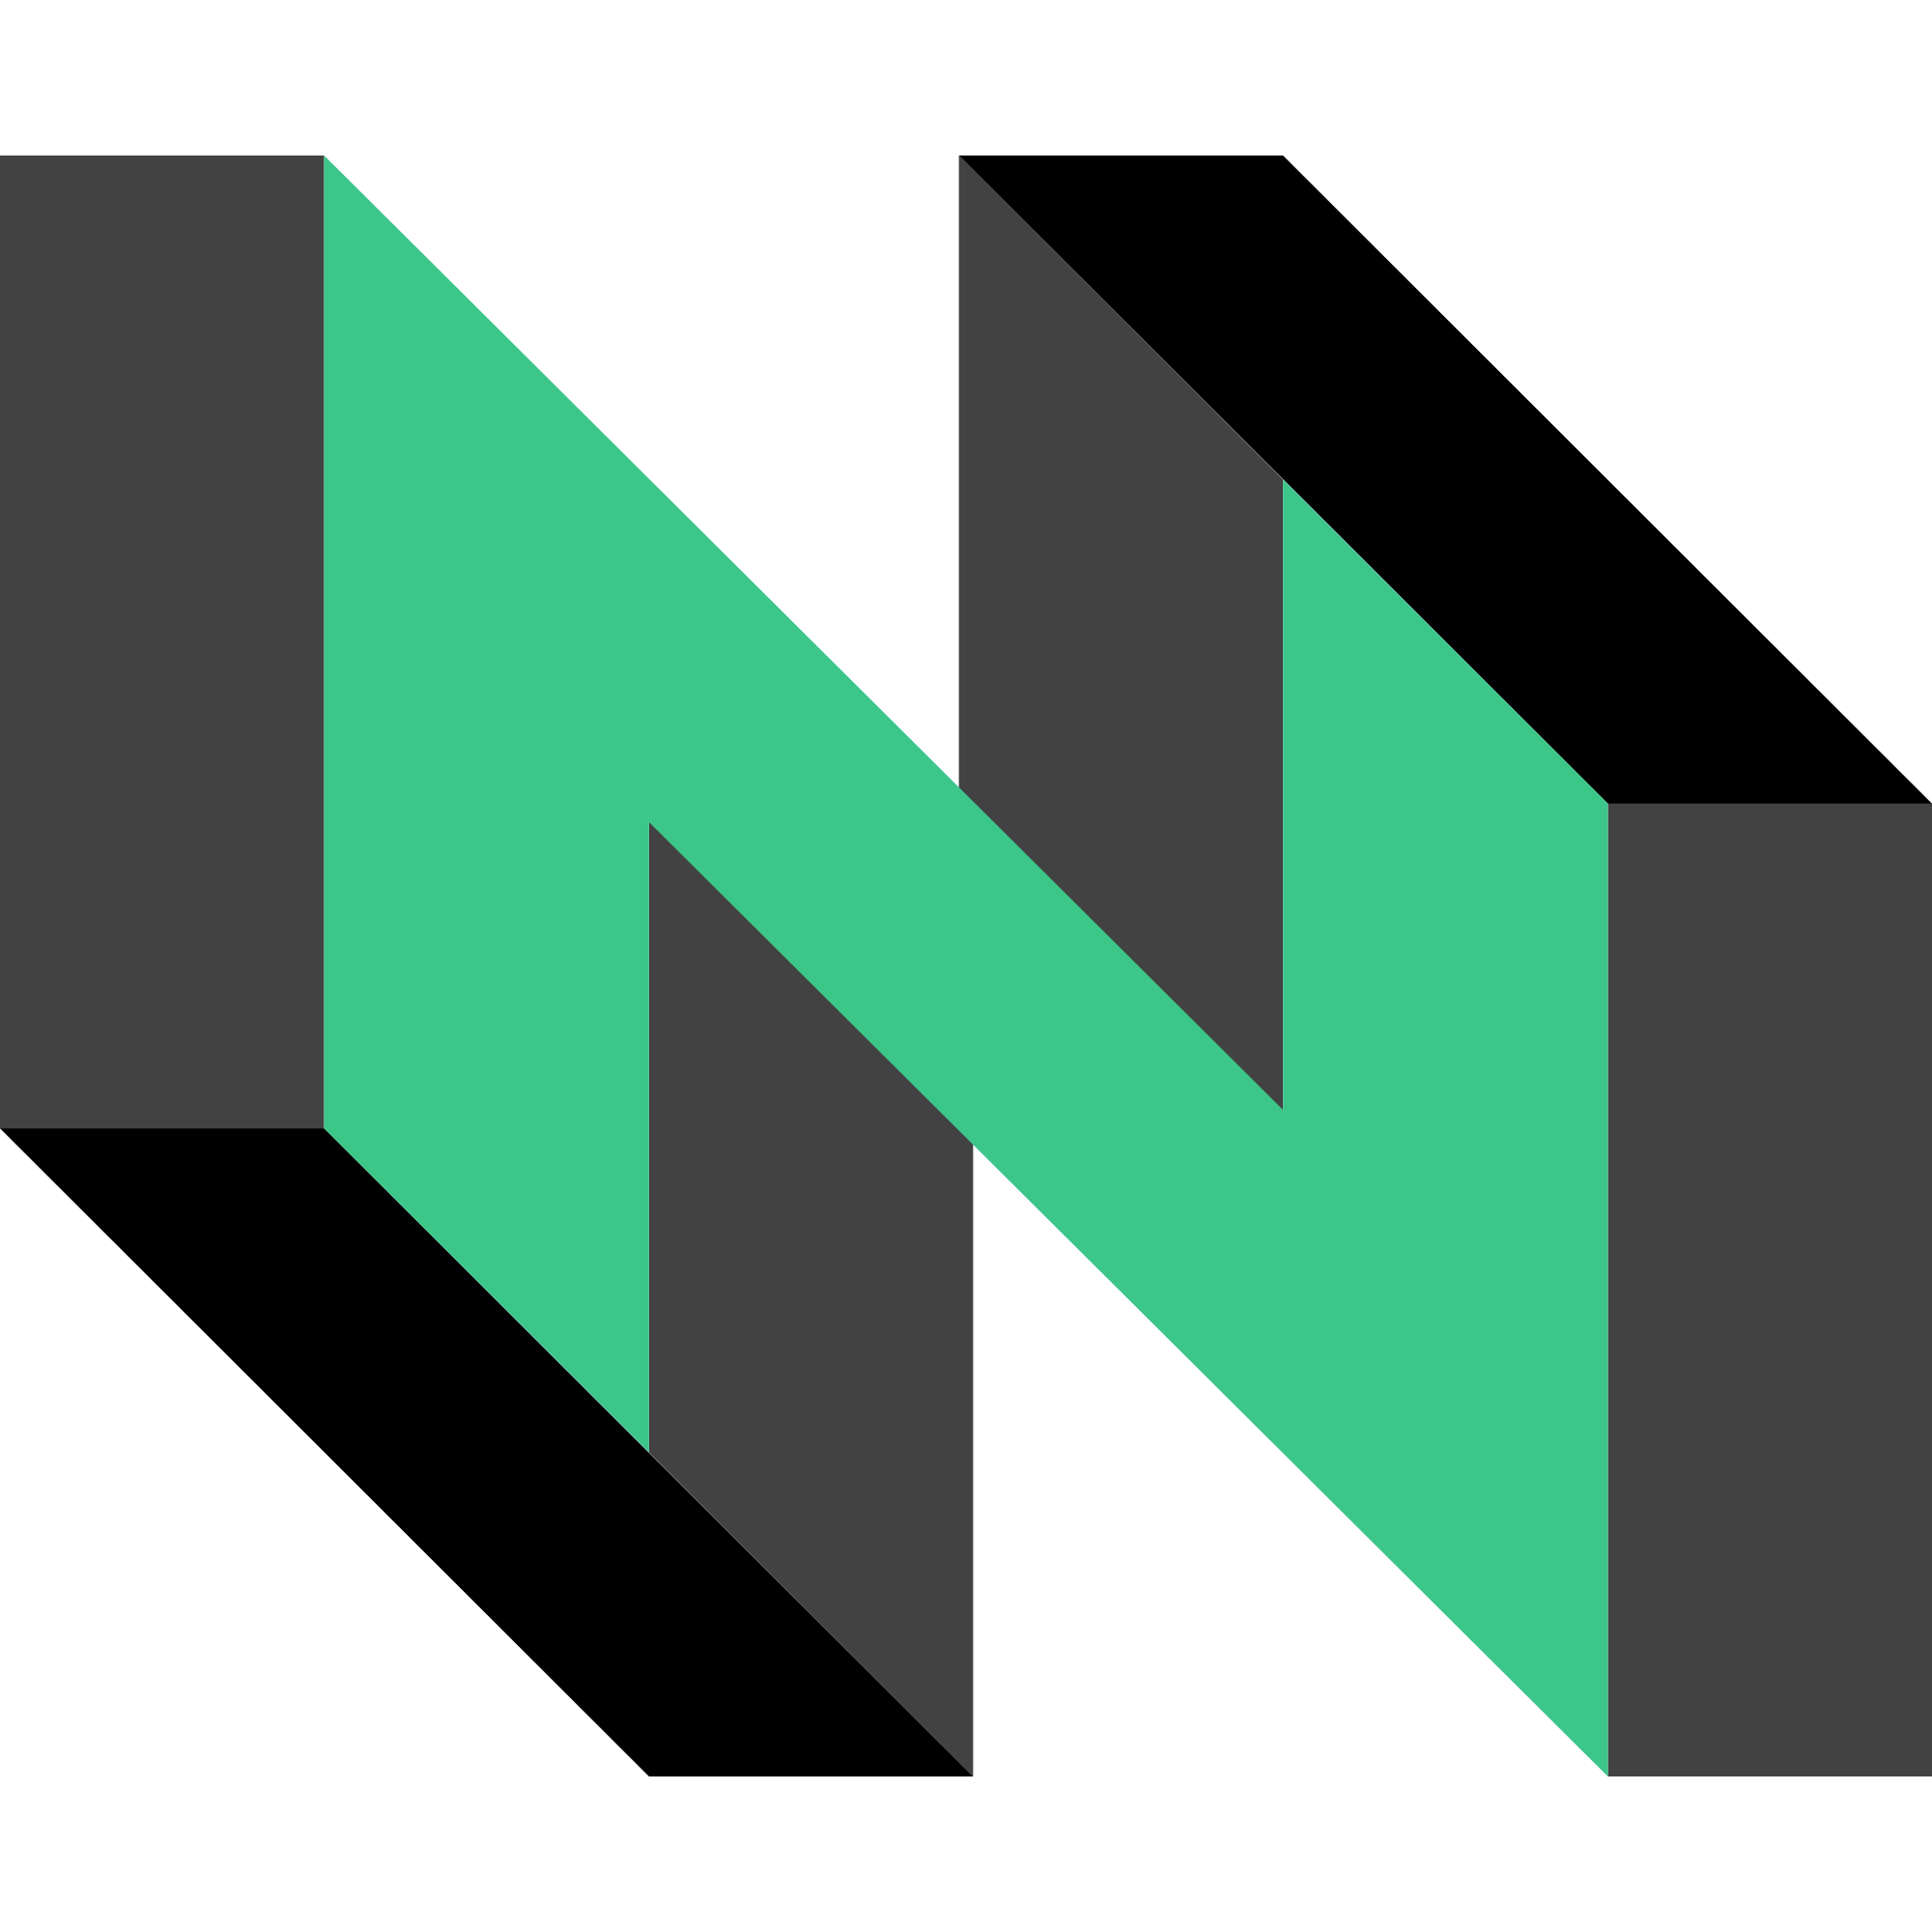 nervos network ckb logo